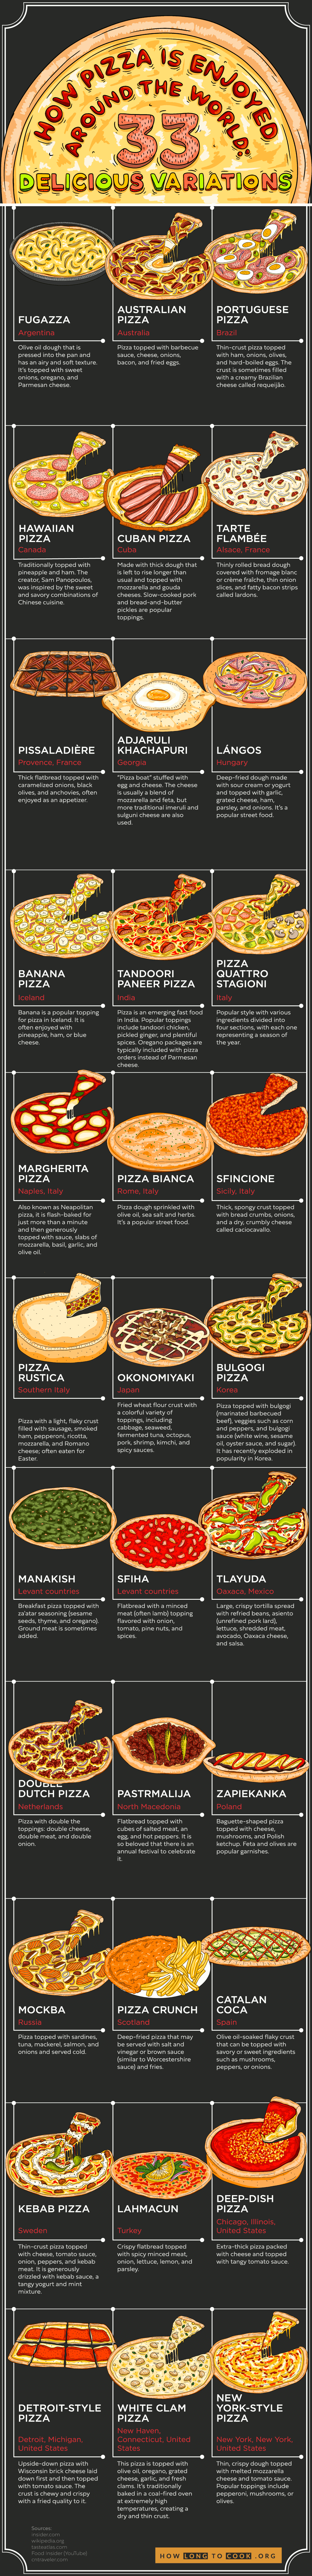 pizzas_around_the_world-Infographic